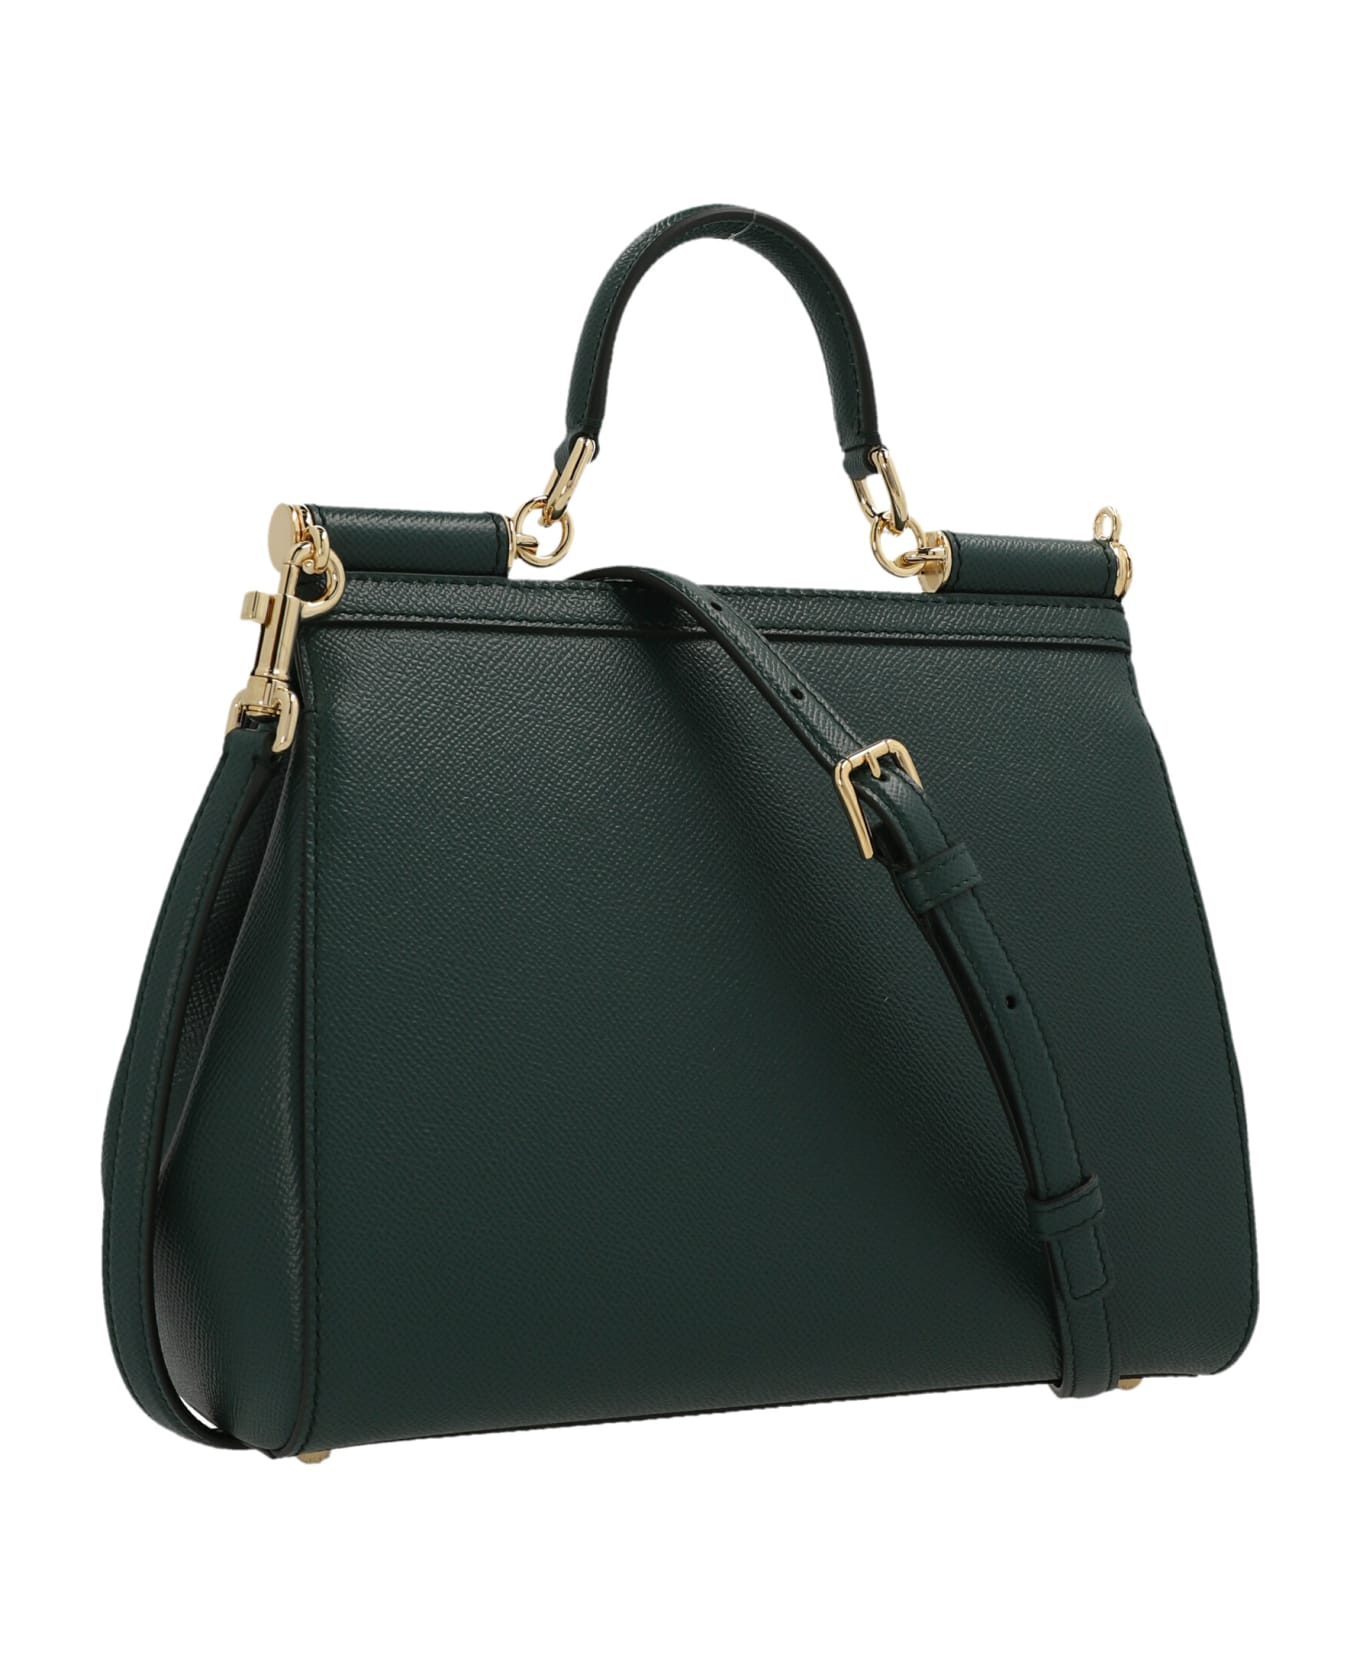 Dolce & Gabbana Sicily Handbag - Green トートバッグ